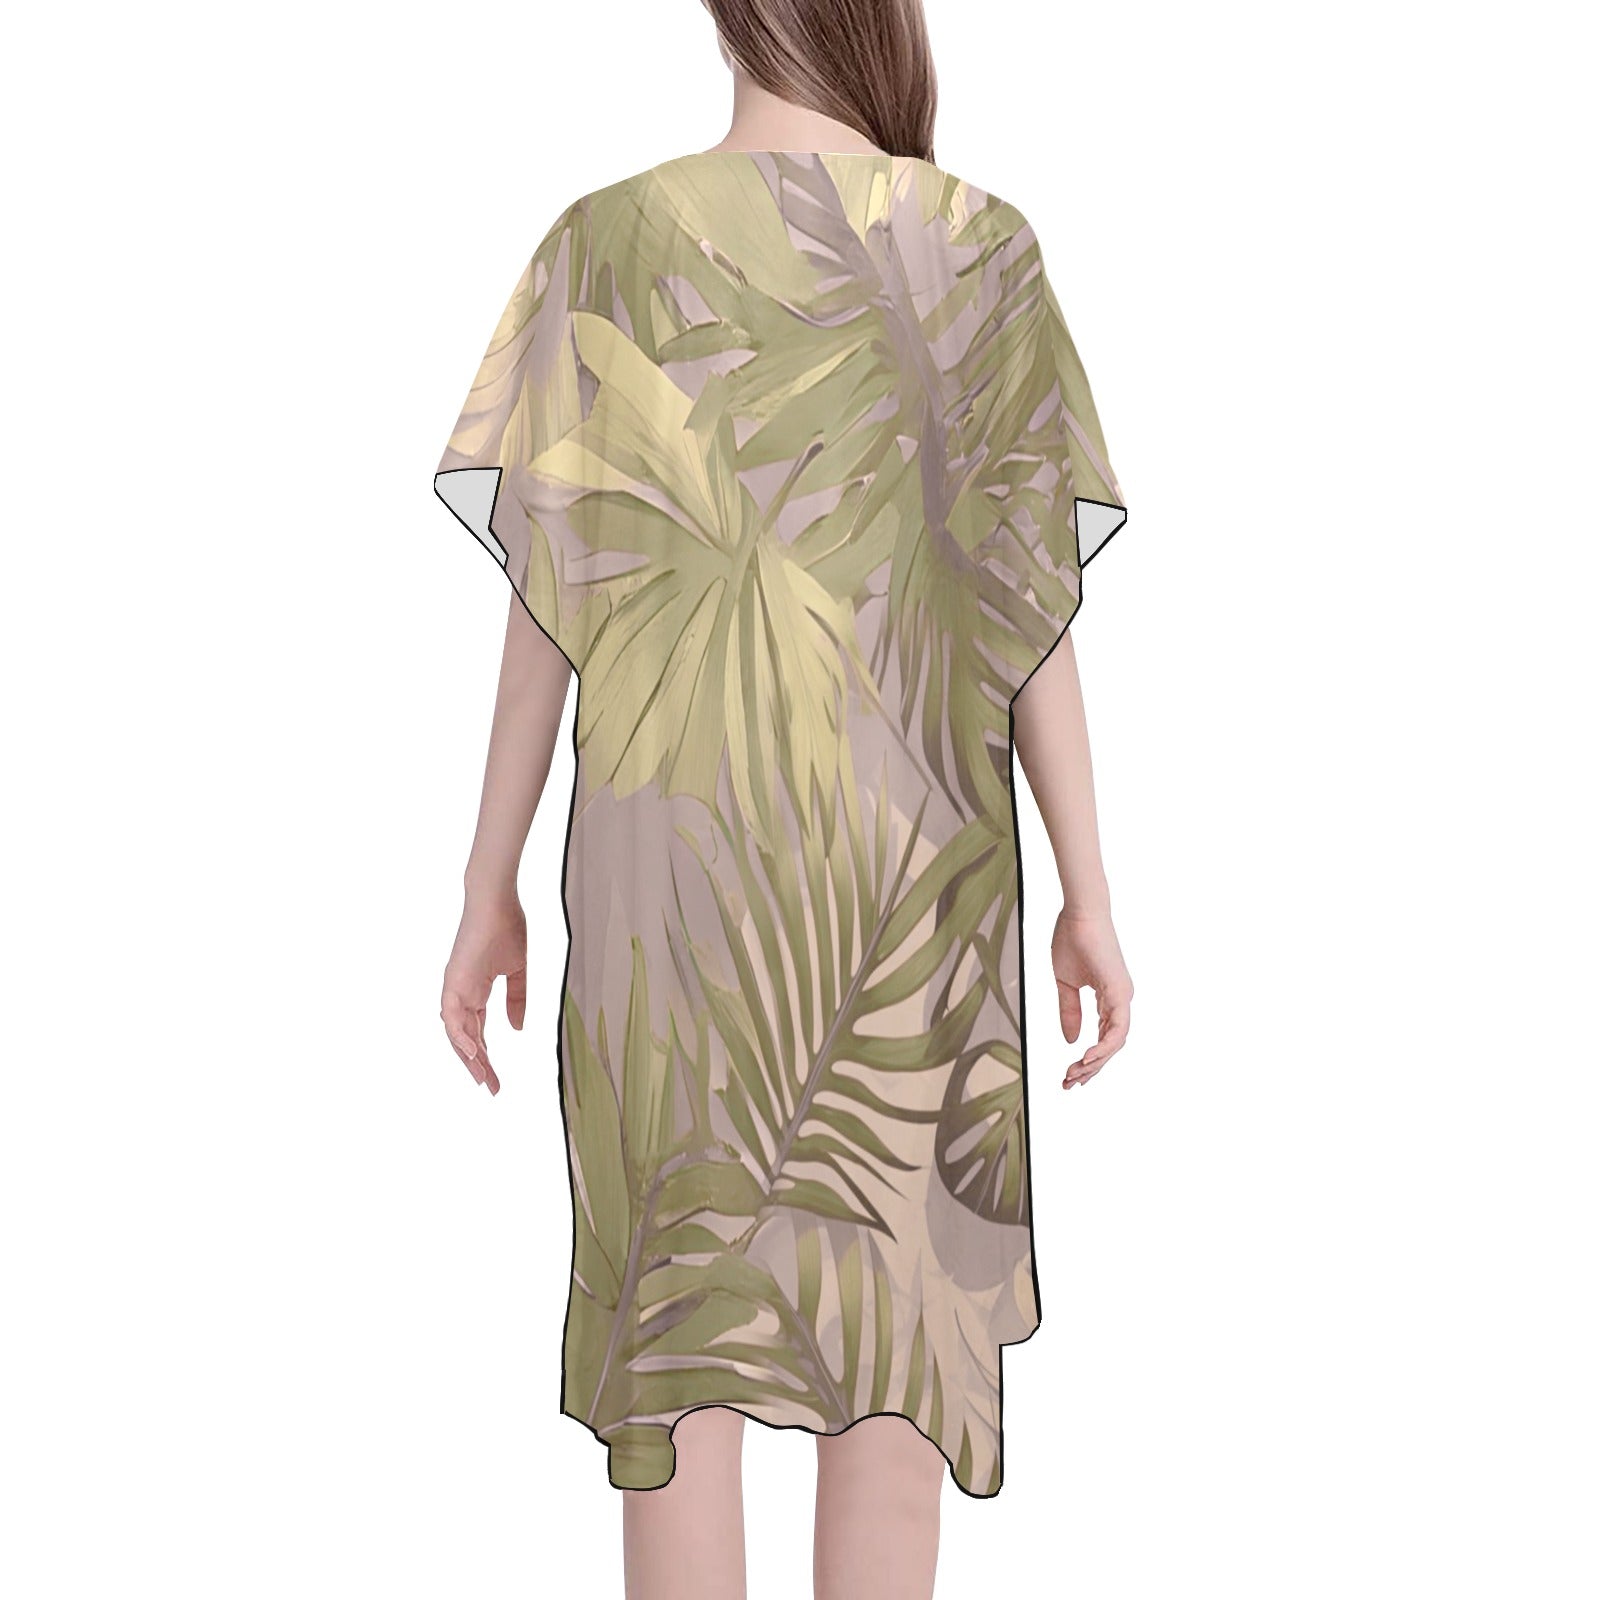 Hawaiian Tropical Print Soft Tones Mid Length Kimono Chiffon Cover Up with Side Slits